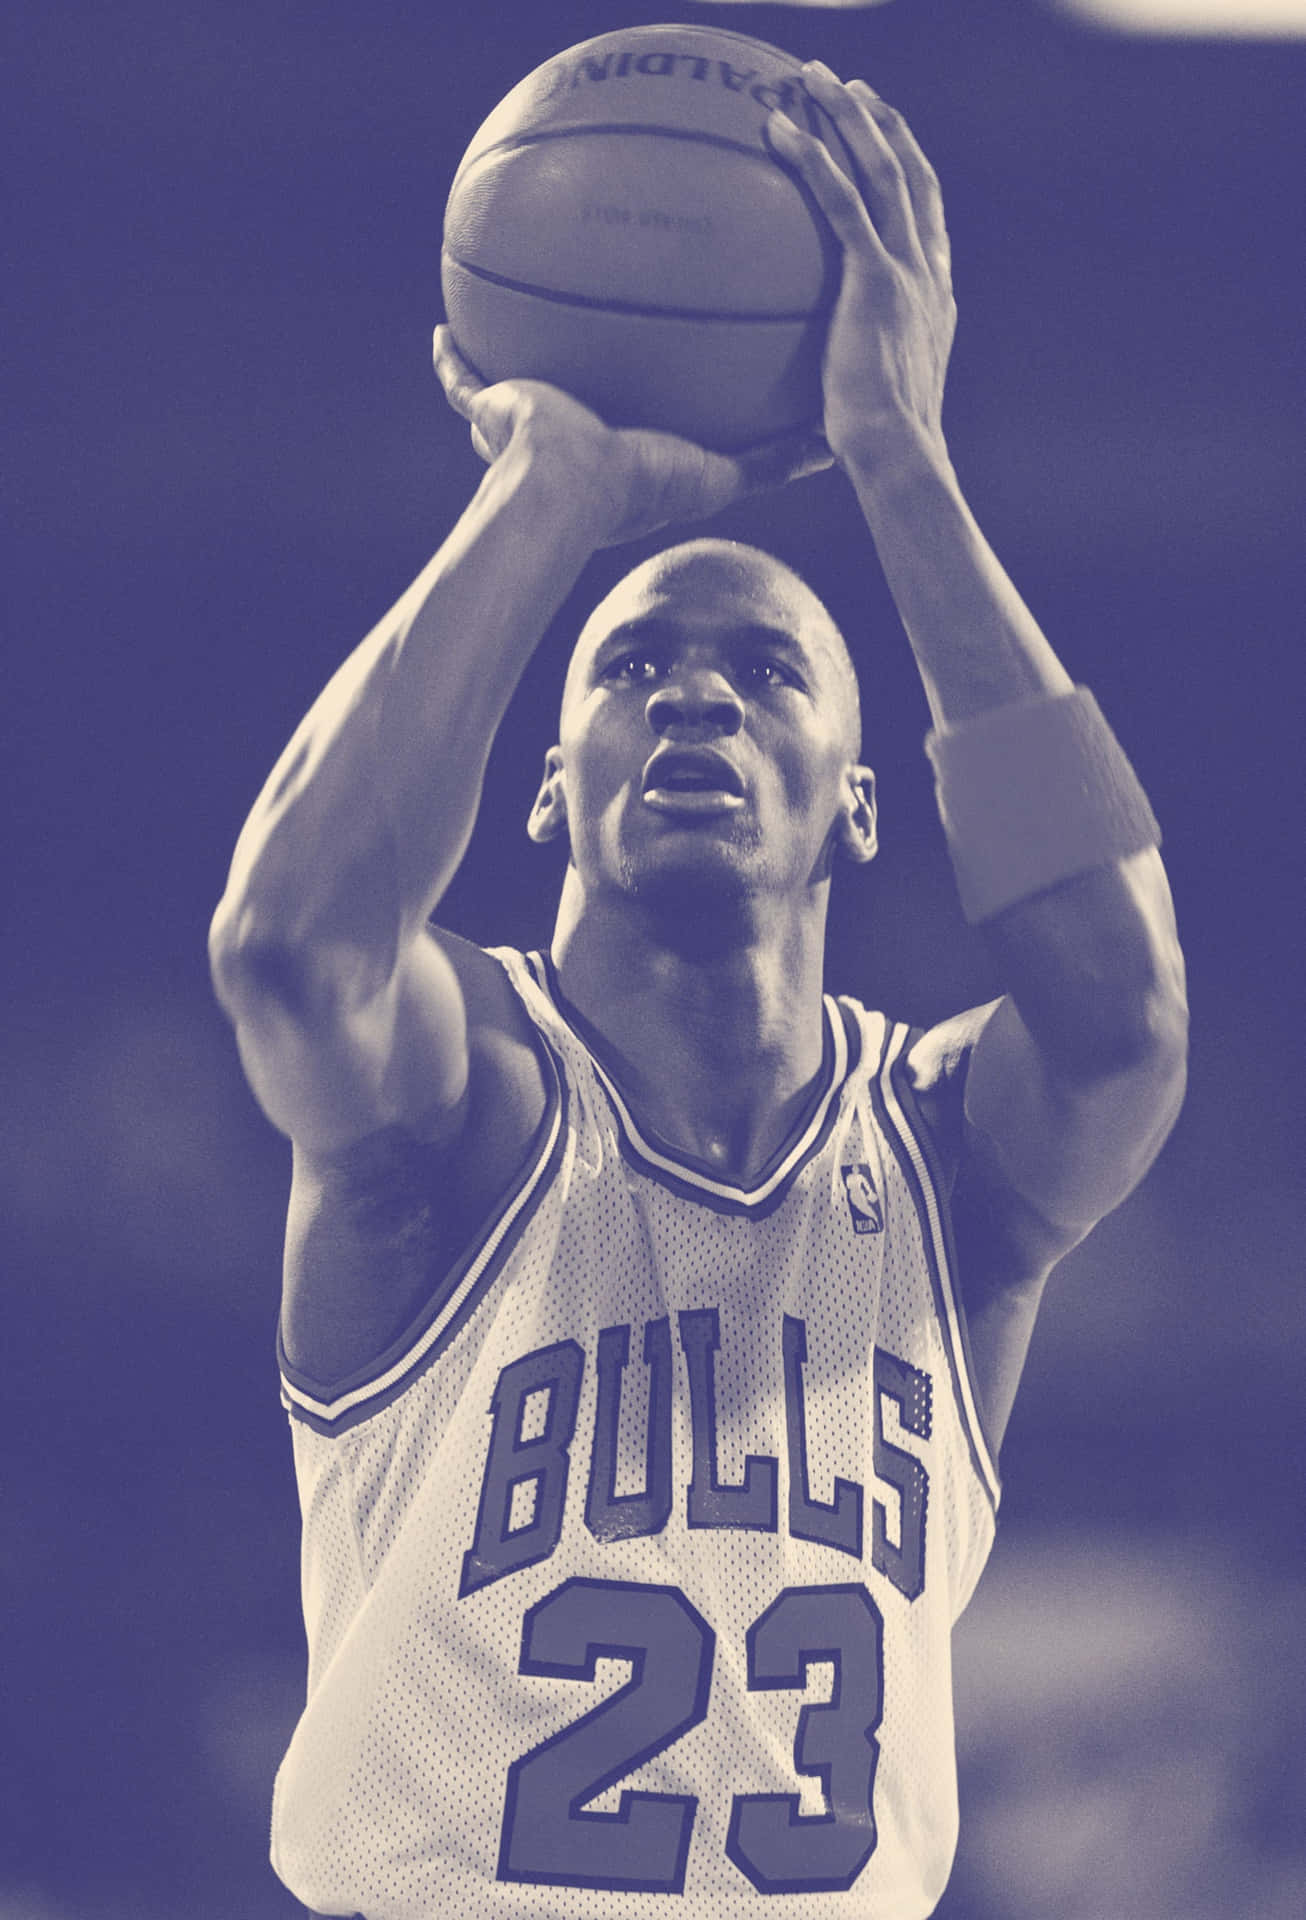 Legendary basketball player Michael Jordan